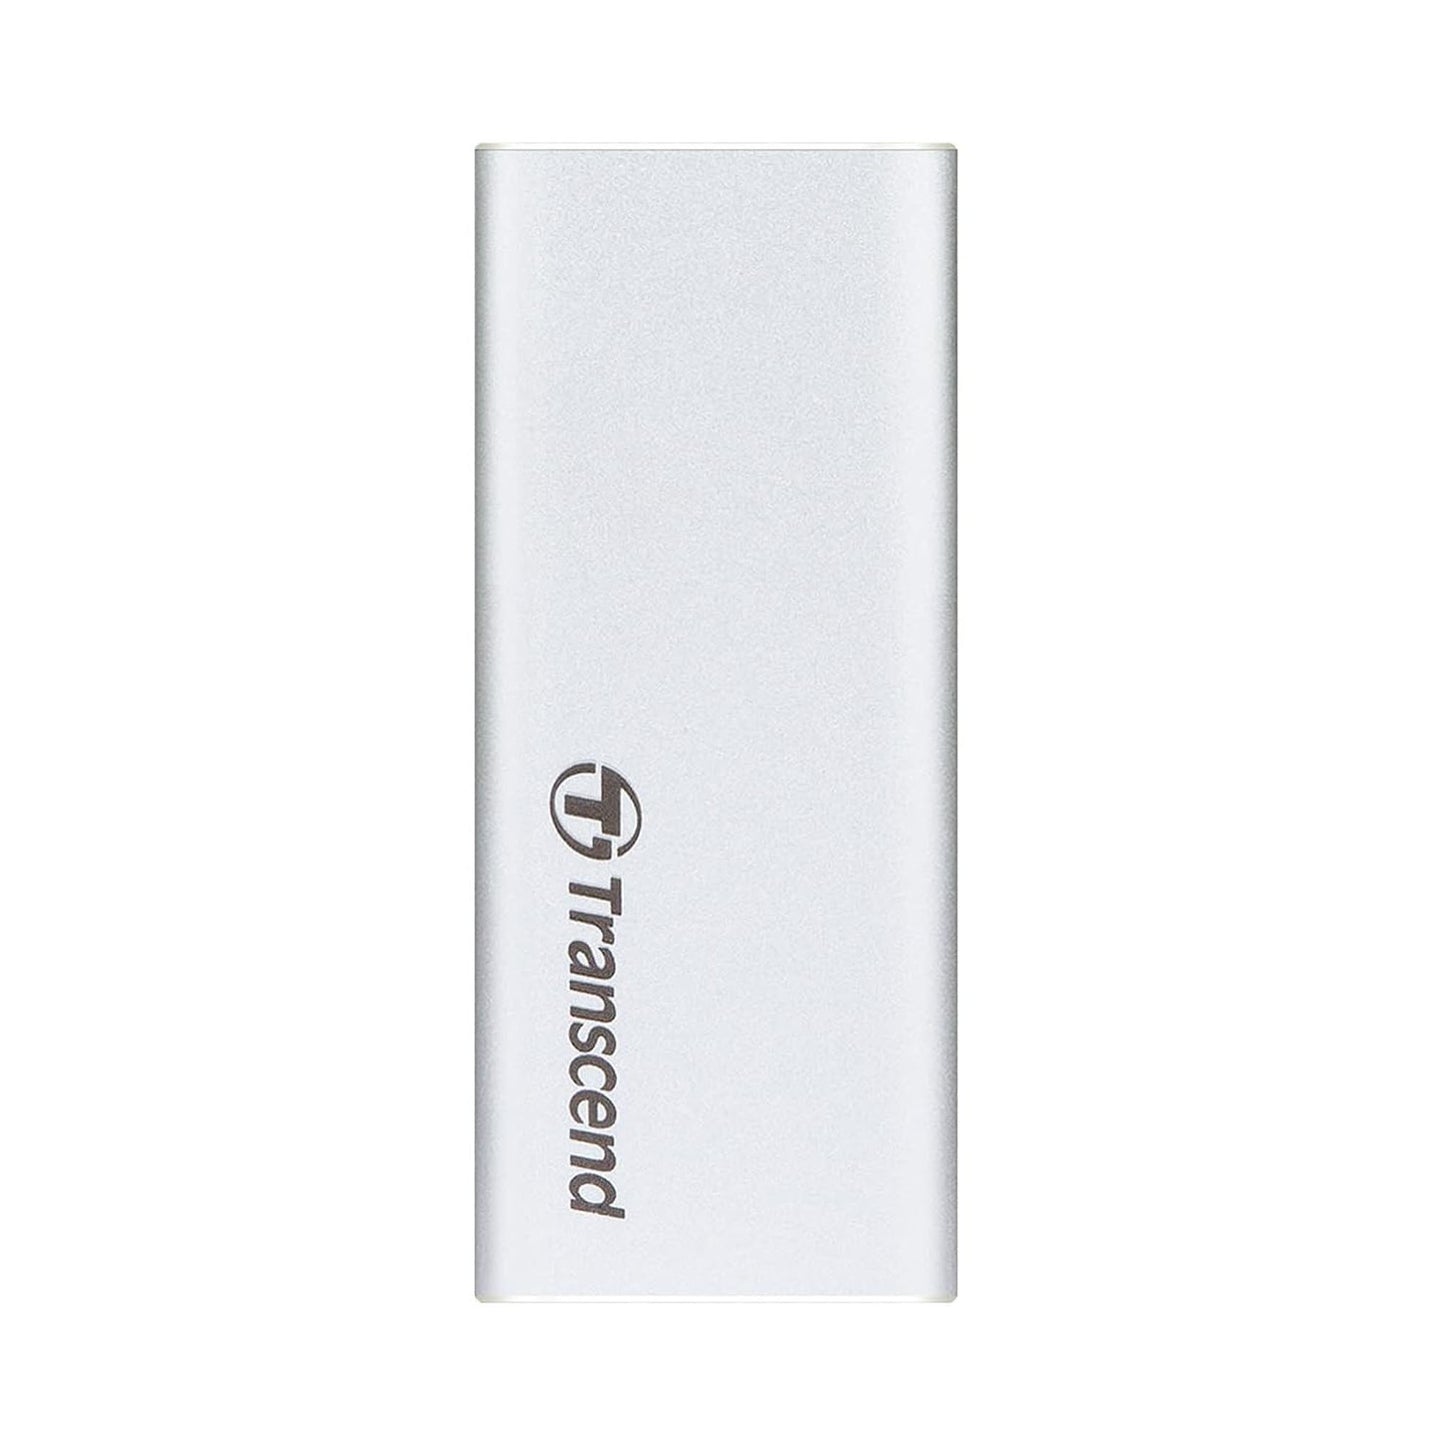 TRANSCEND ESD260C Portable SSD USB 3.1 Gen 2 Type C 500GB - Silver